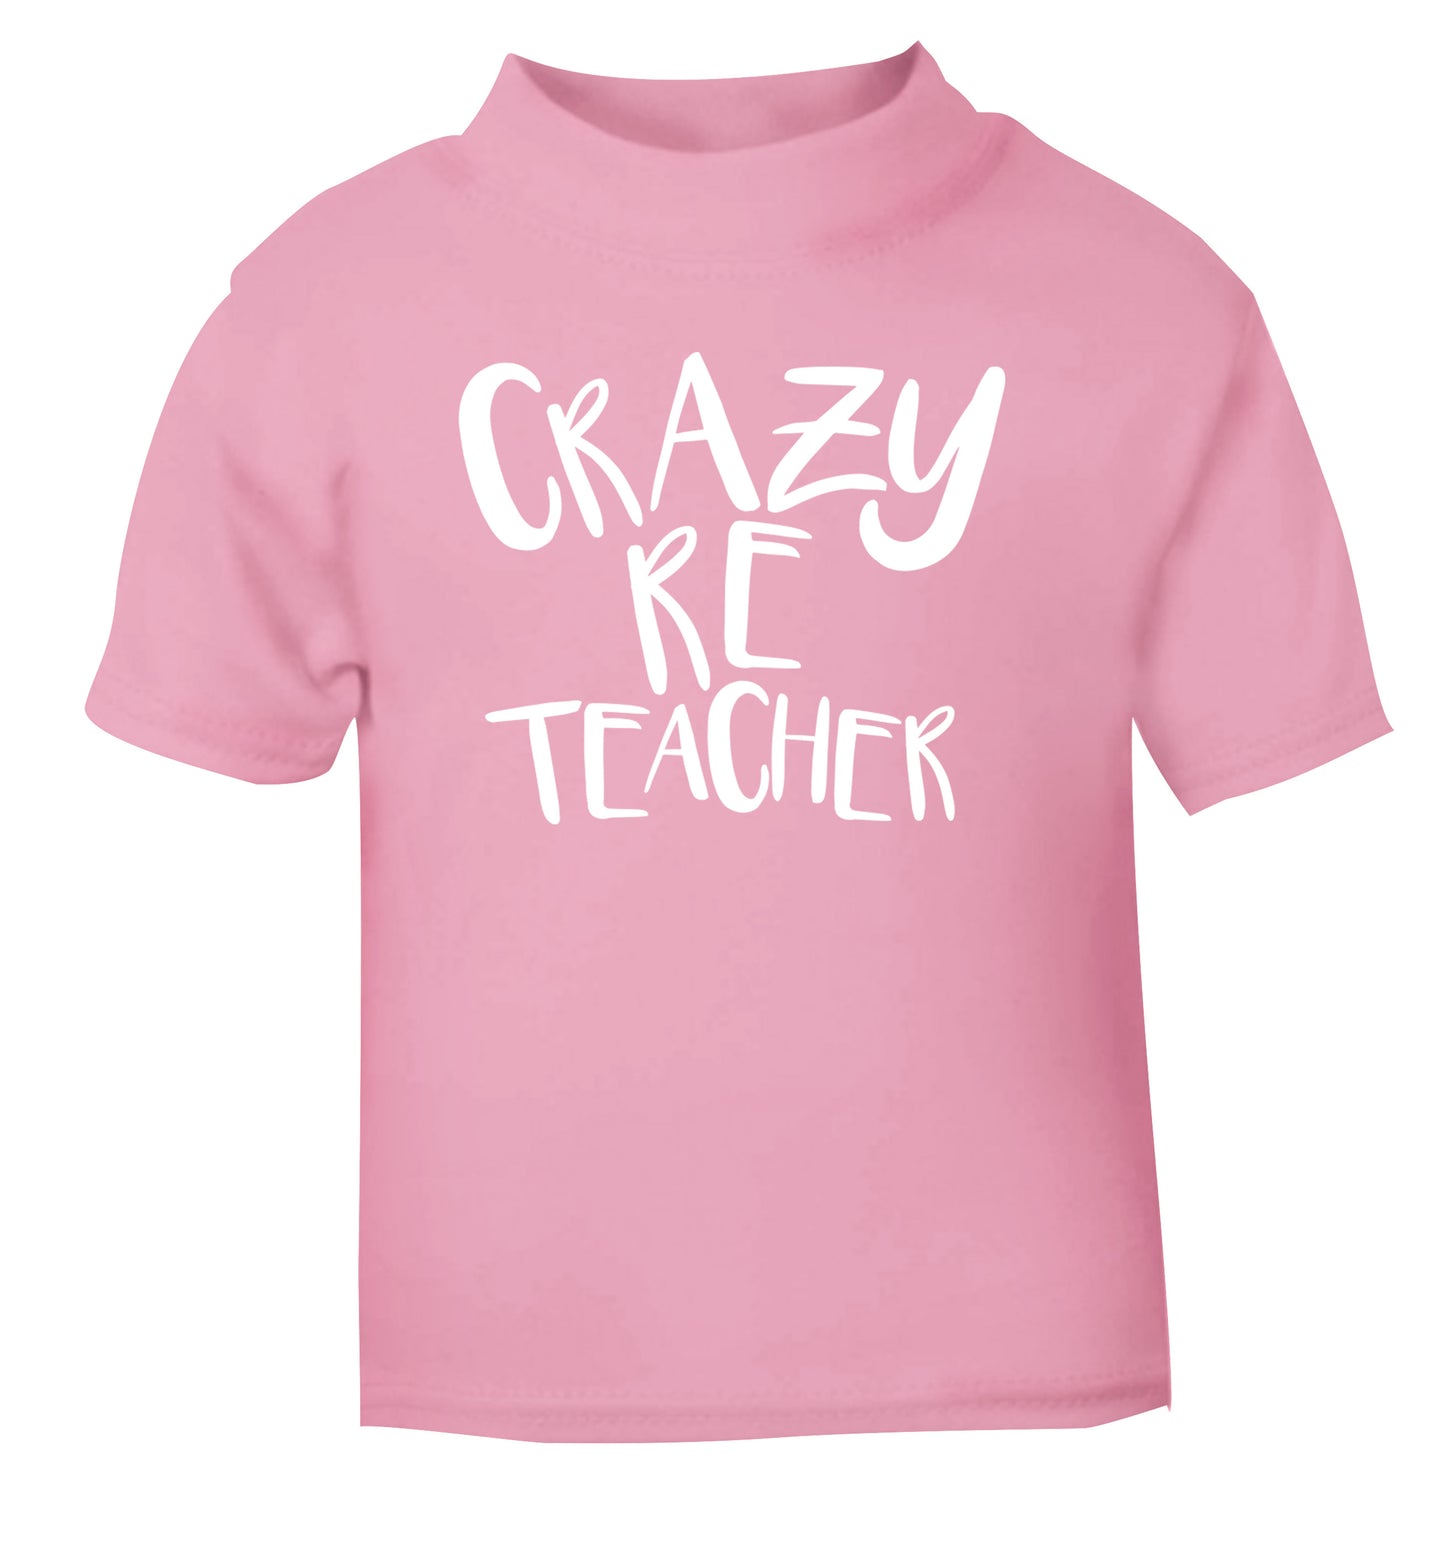 Crazy RE teacher light pink Baby Toddler Tshirt 2 Years